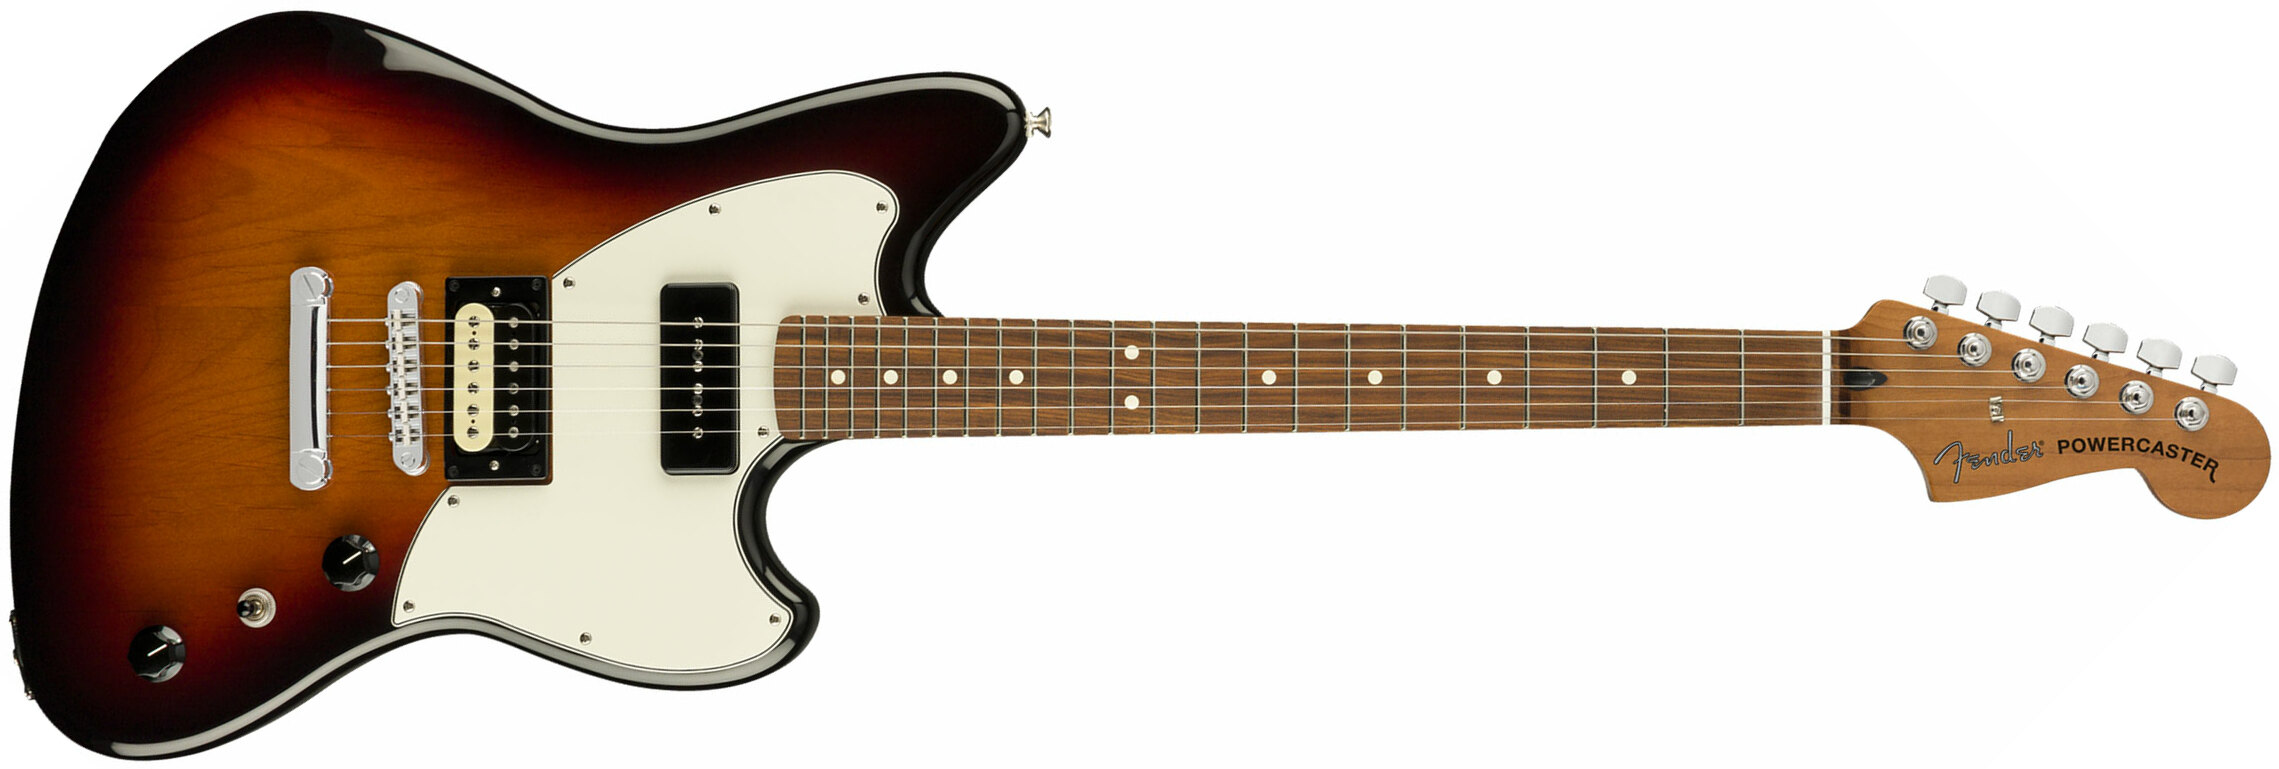 Fender Powercaster Alternate Reality Ltd Hp90 Ht Pf - 3-color Sunburst - Retro-Rock-E-Gitarre - Main picture